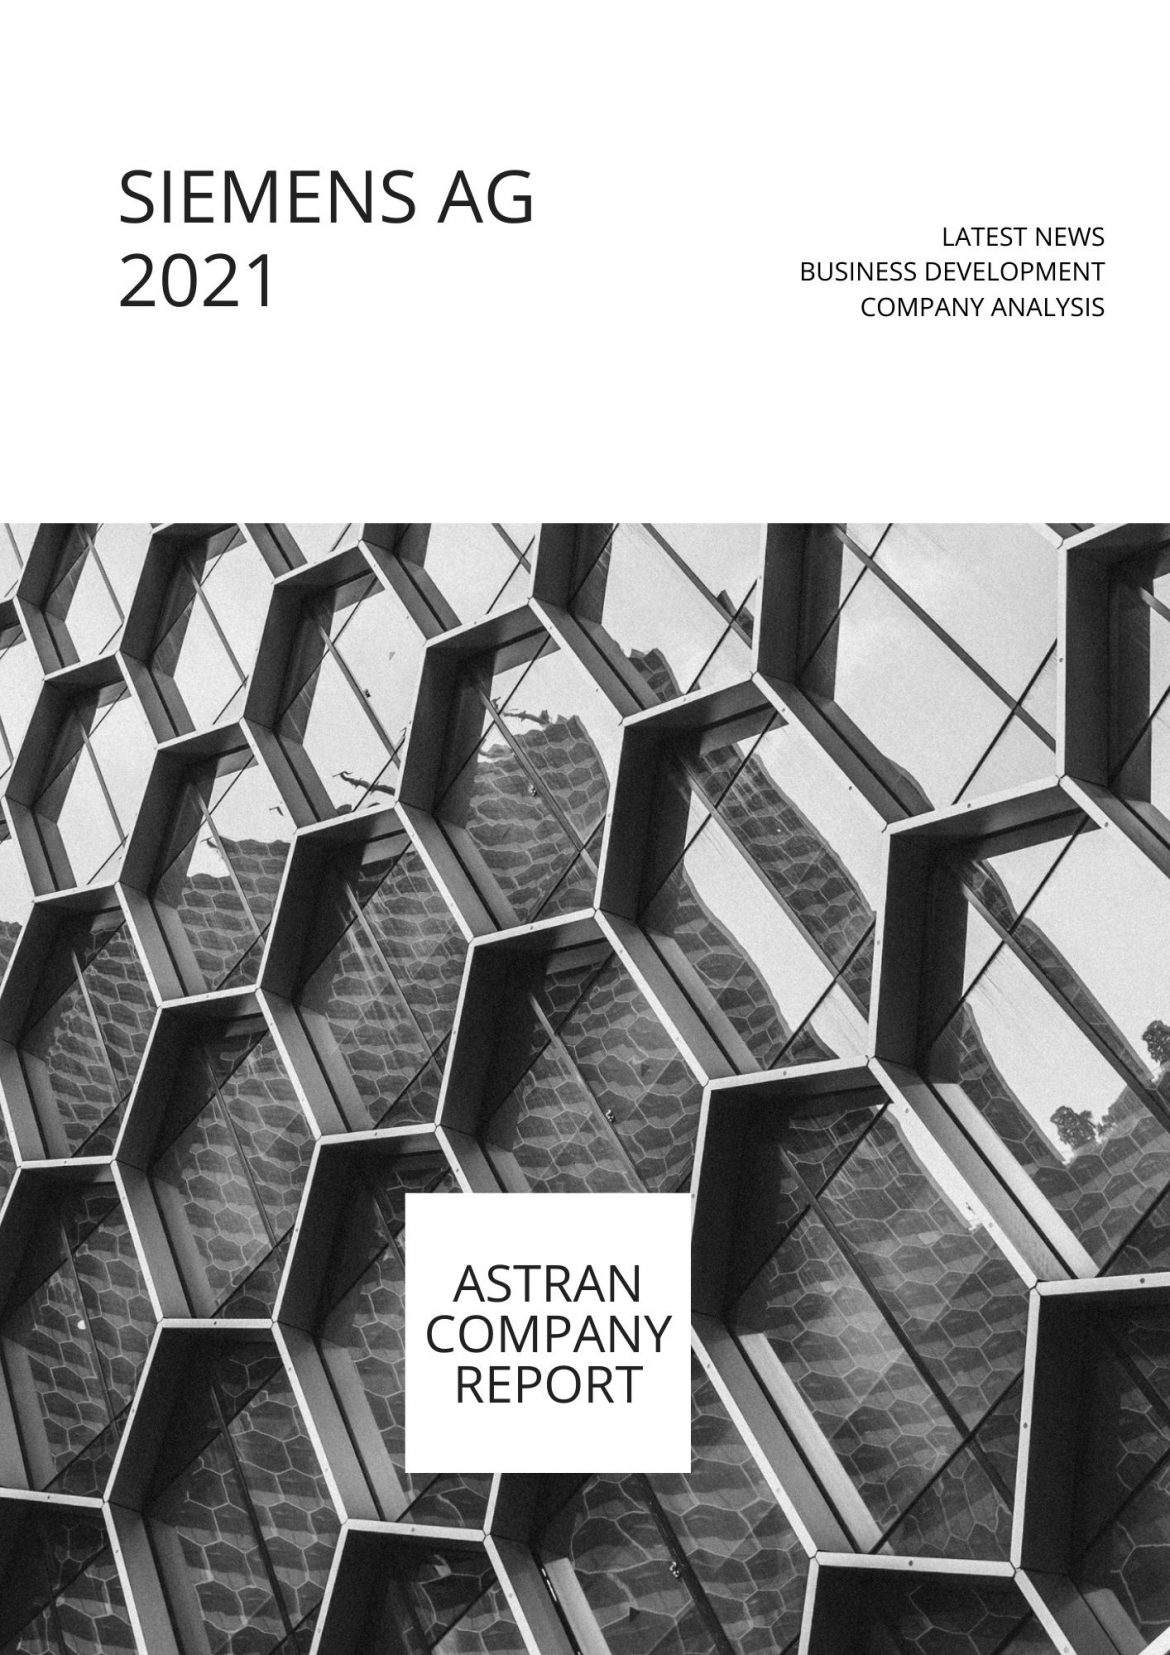 Company Report & Profile Siemens AG 2021